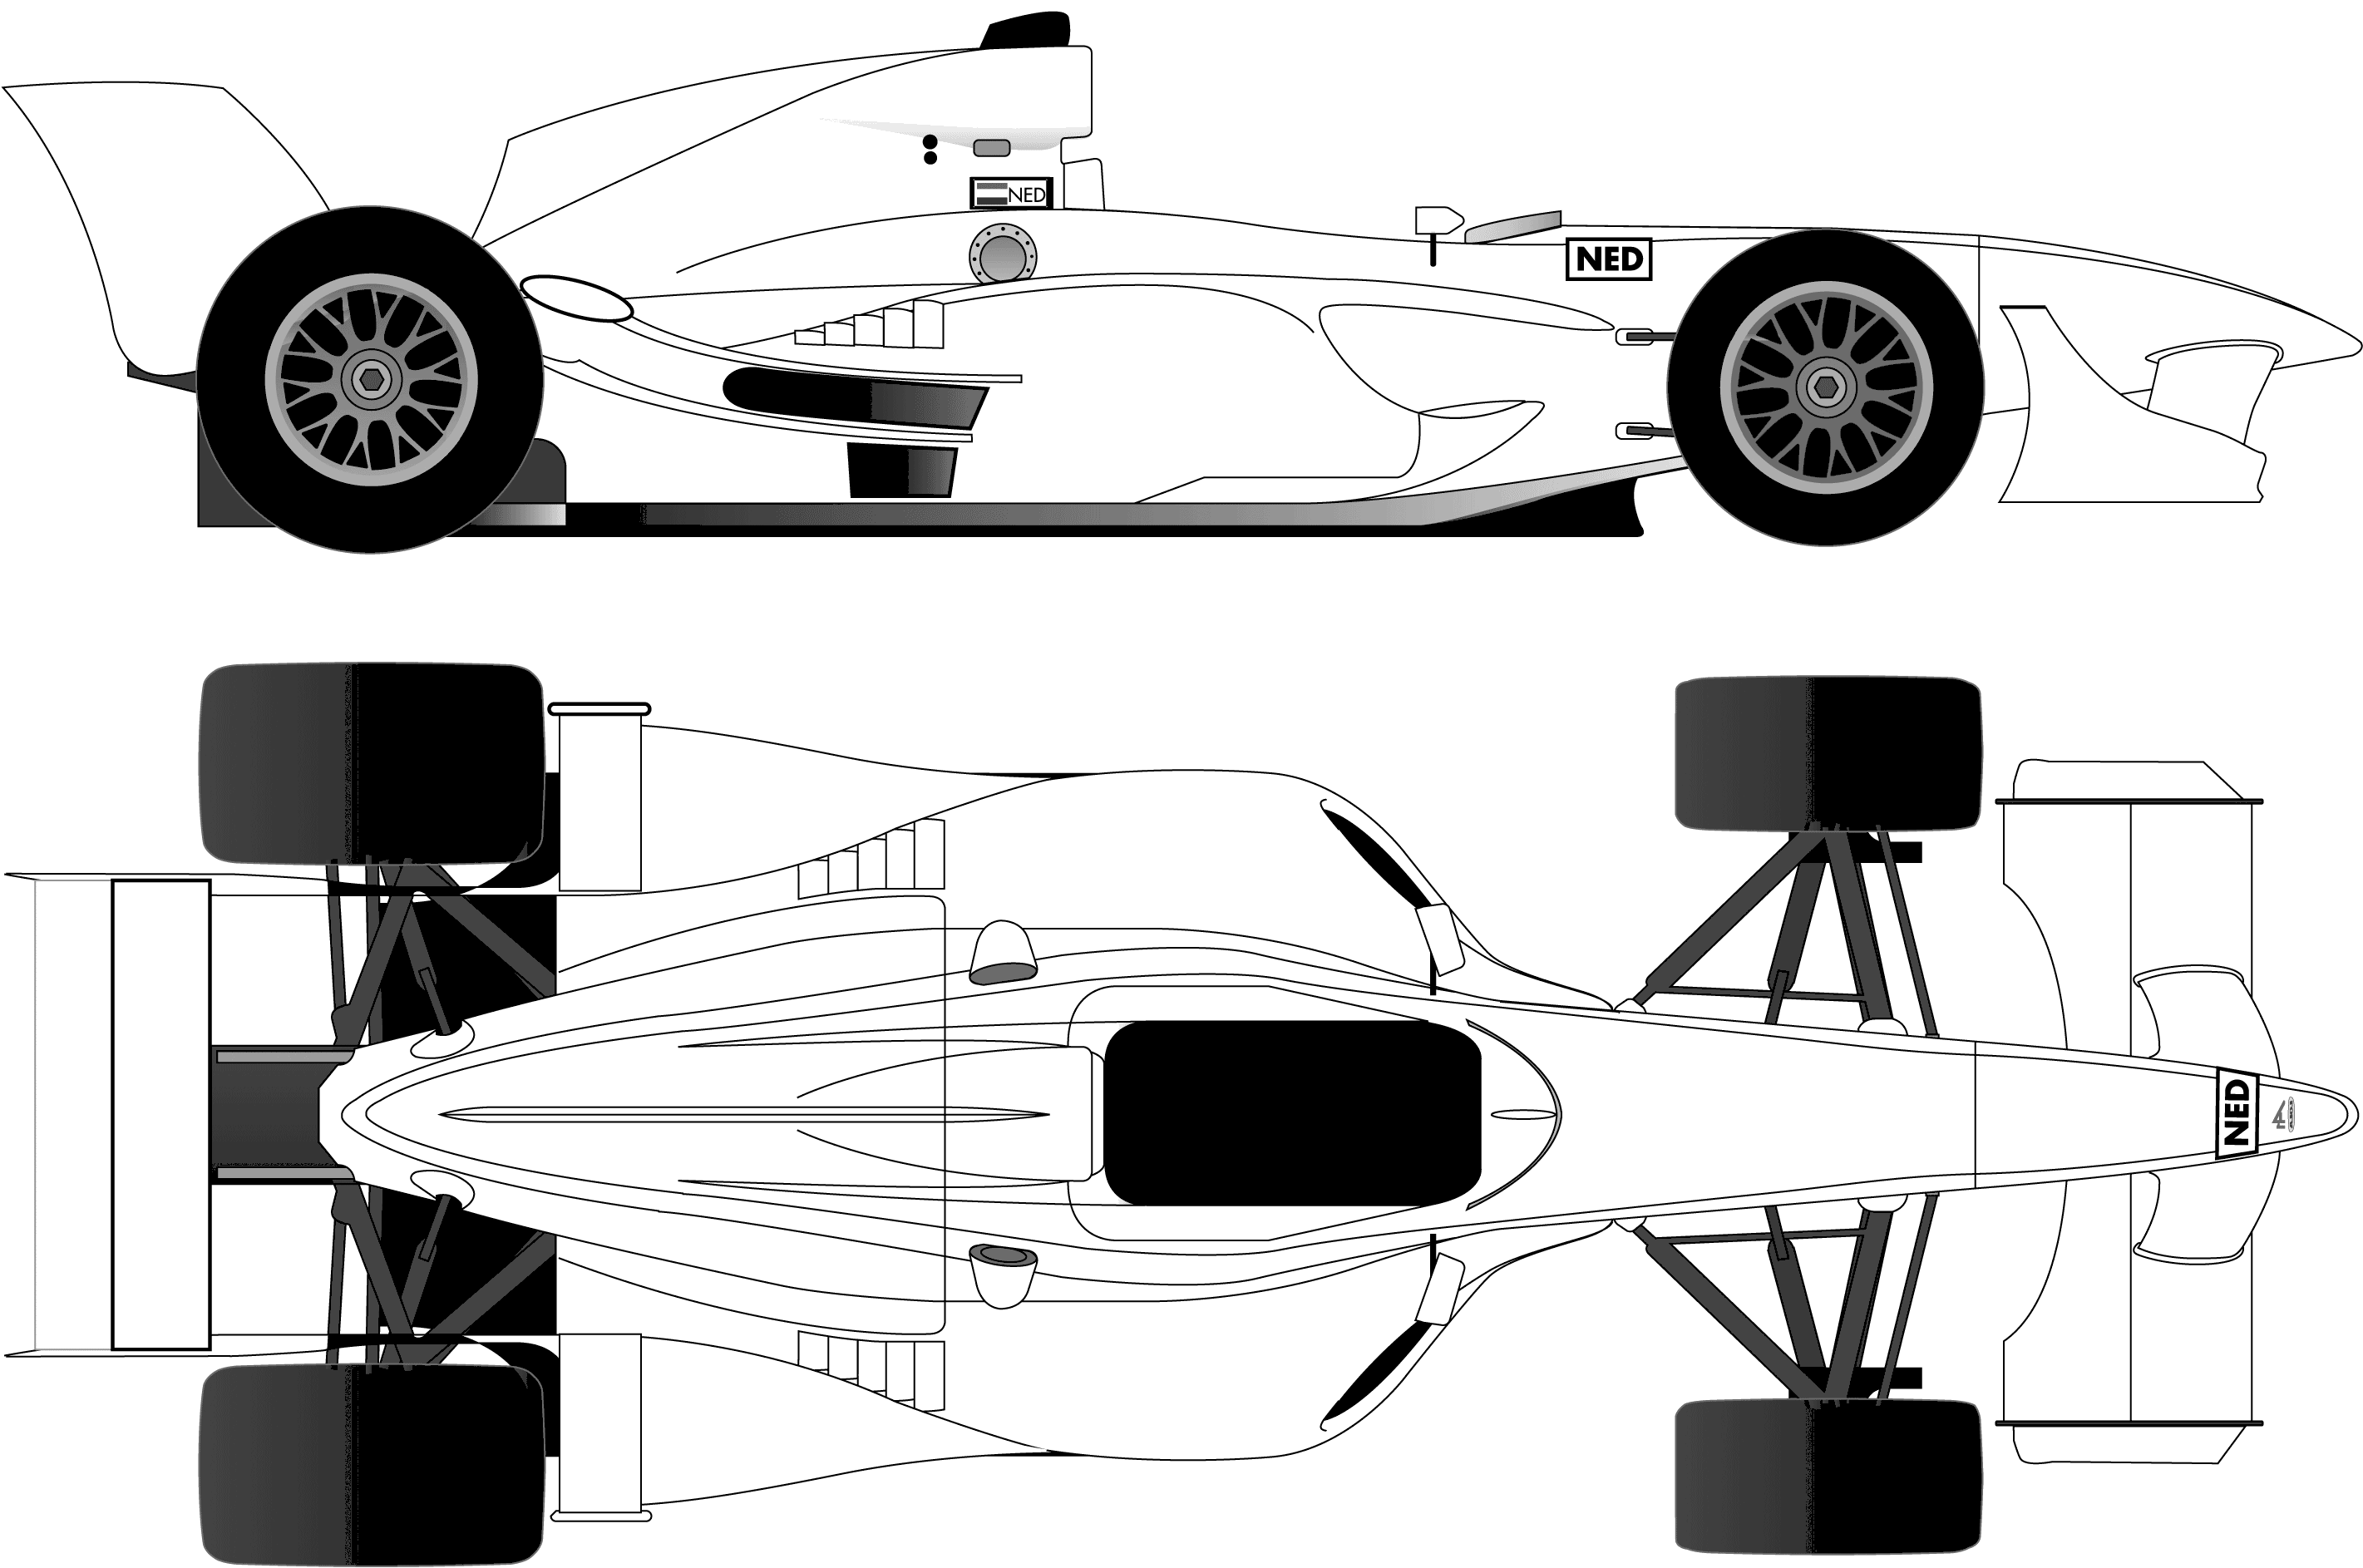 Other A1 GP Formula Car blueprints